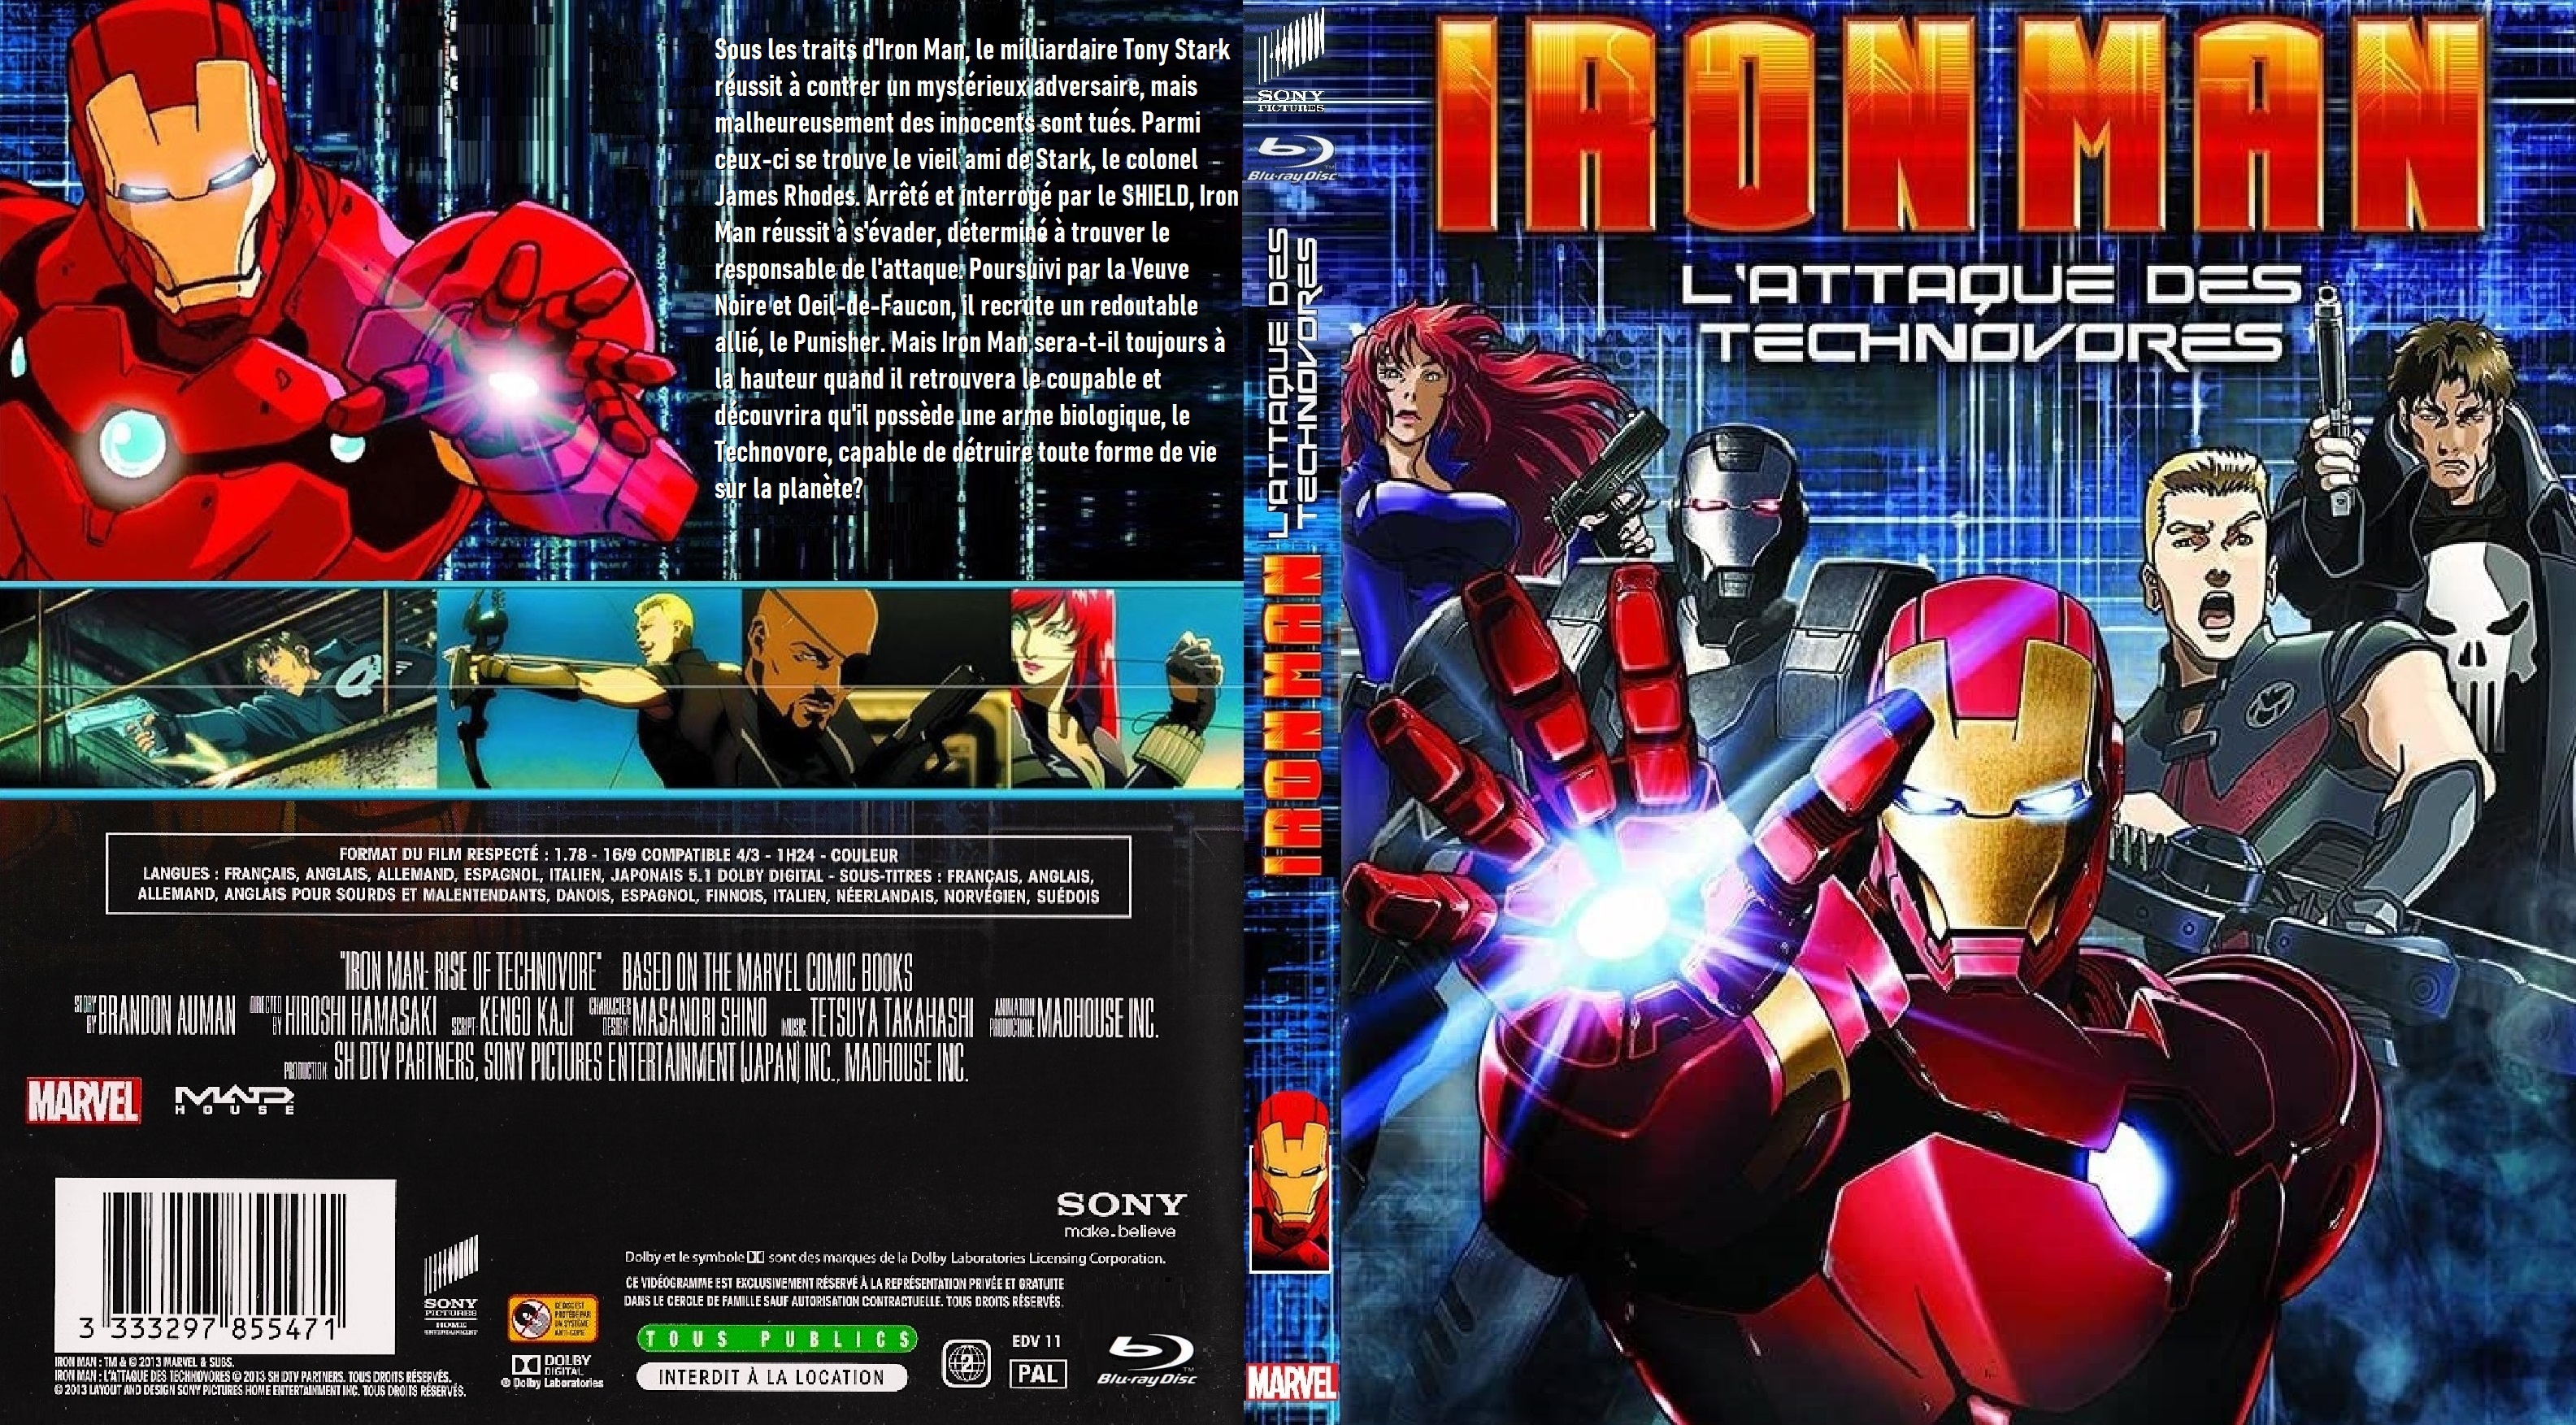 Jaquette DVD Iron Man L